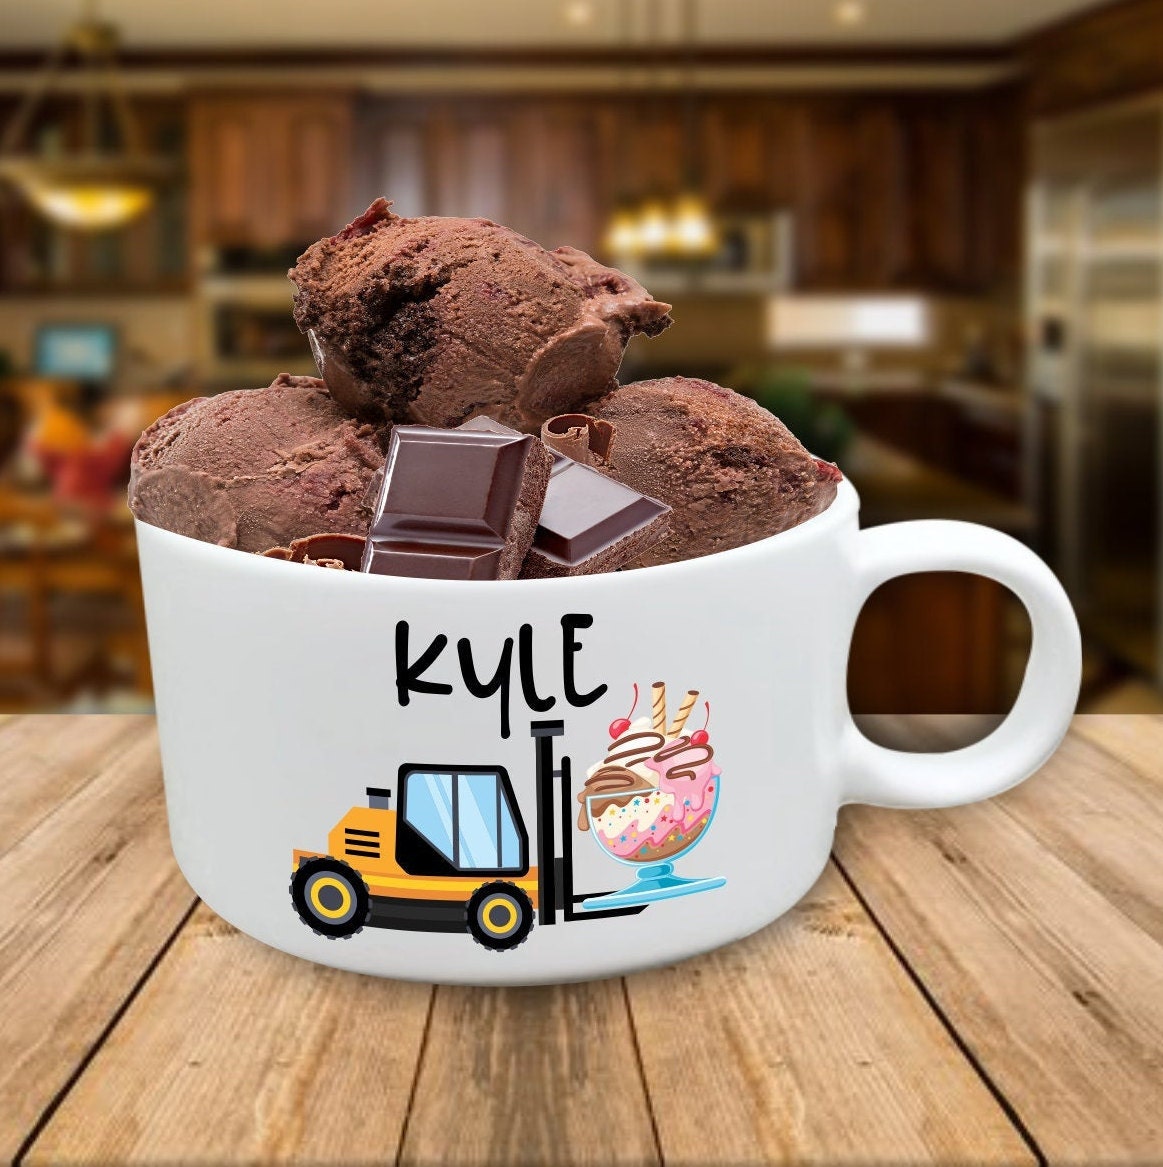 Custom Ice Cream Mug 